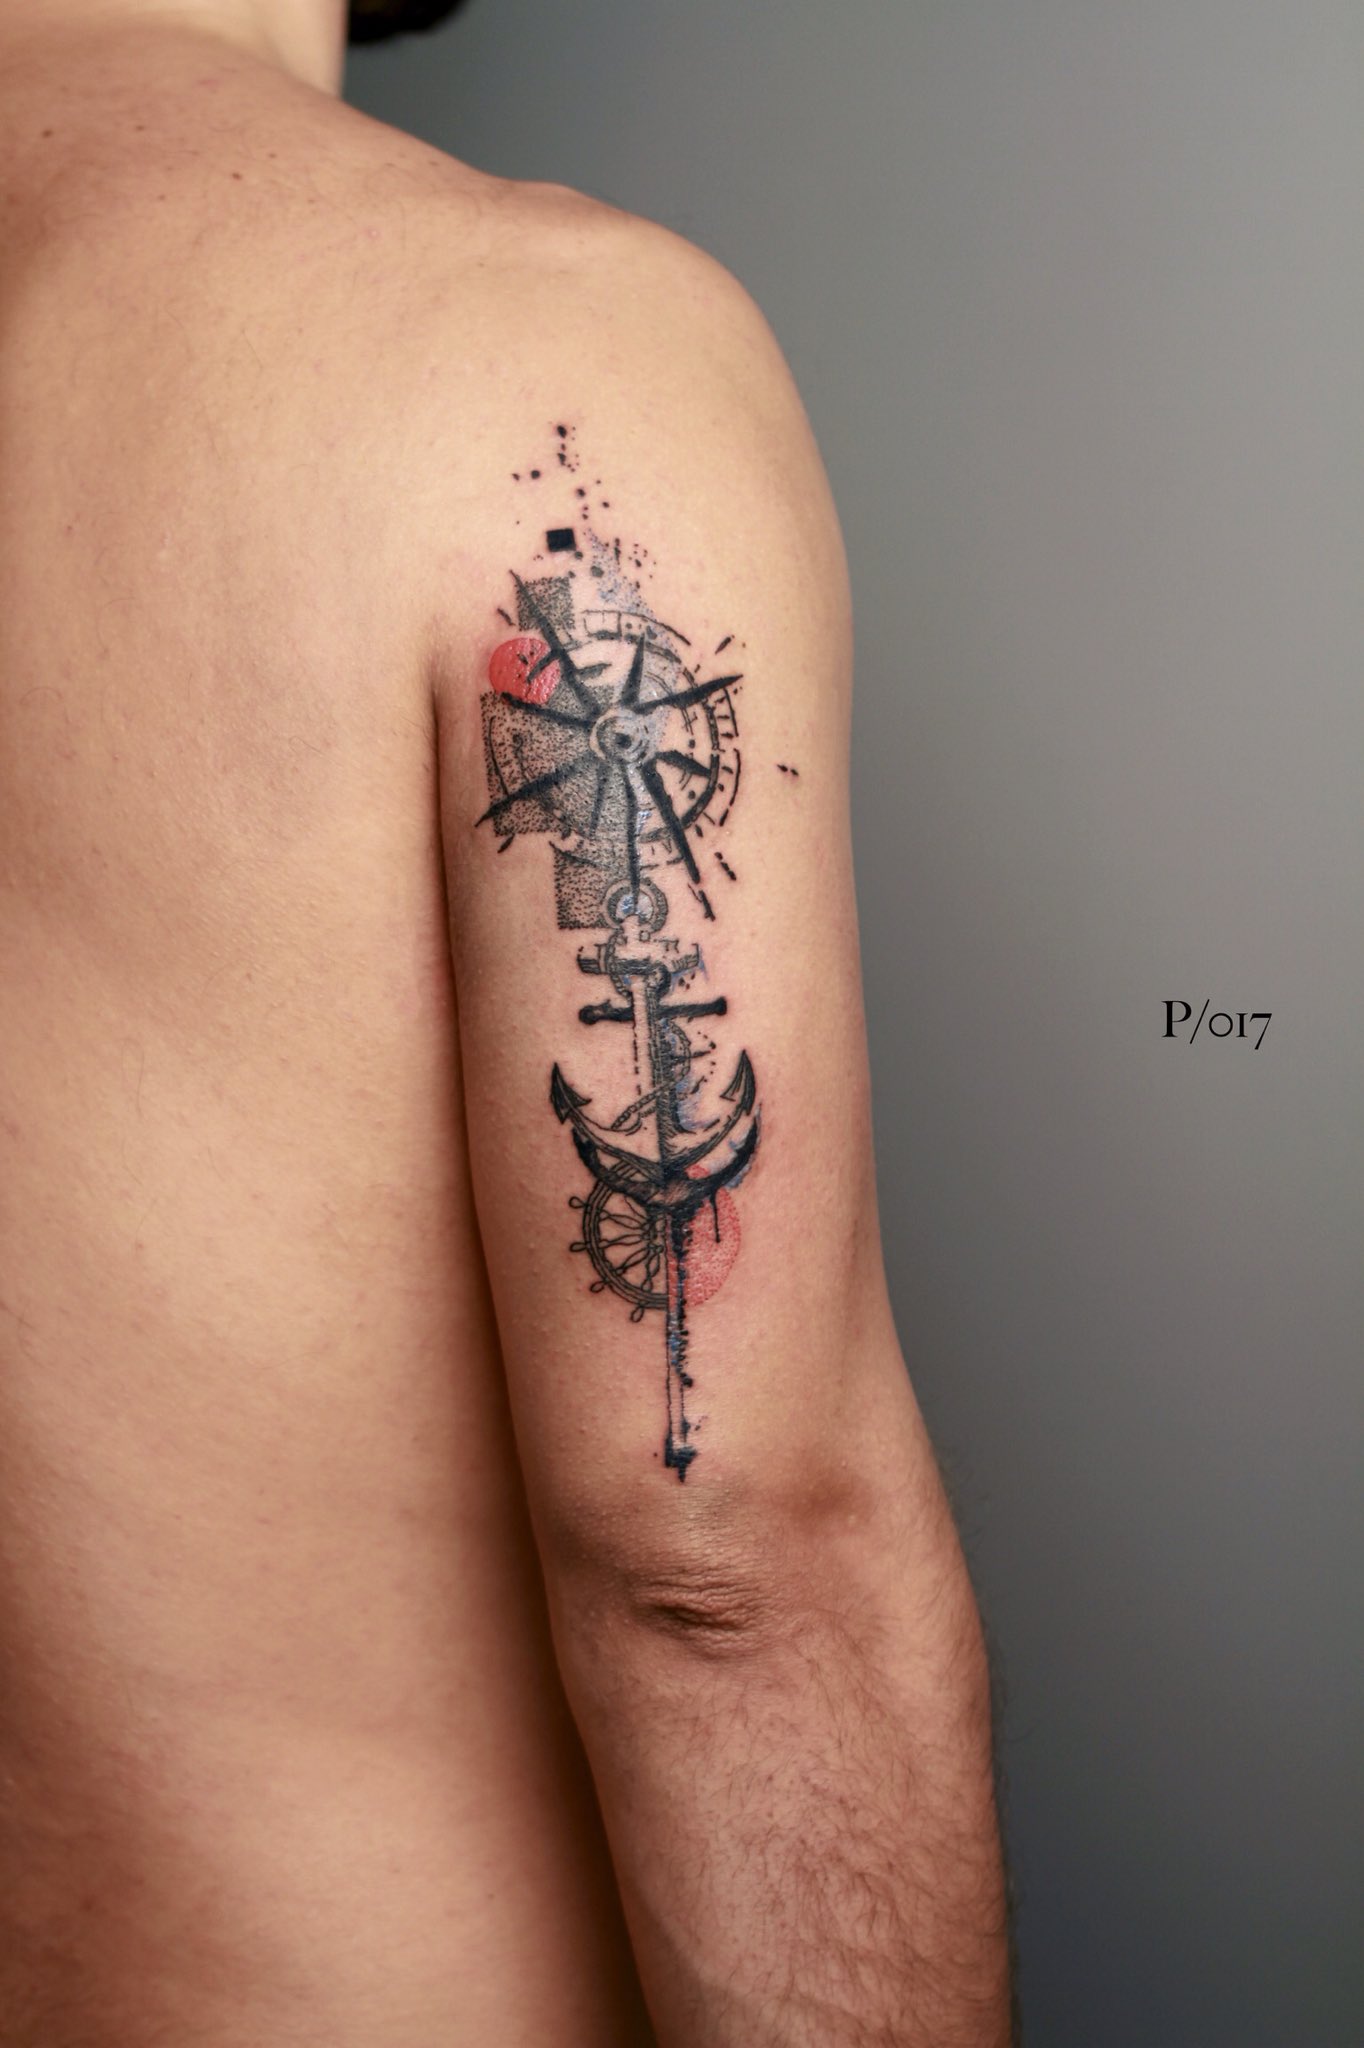 Gohan Tattoo 2 by hulfie on DeviantArt